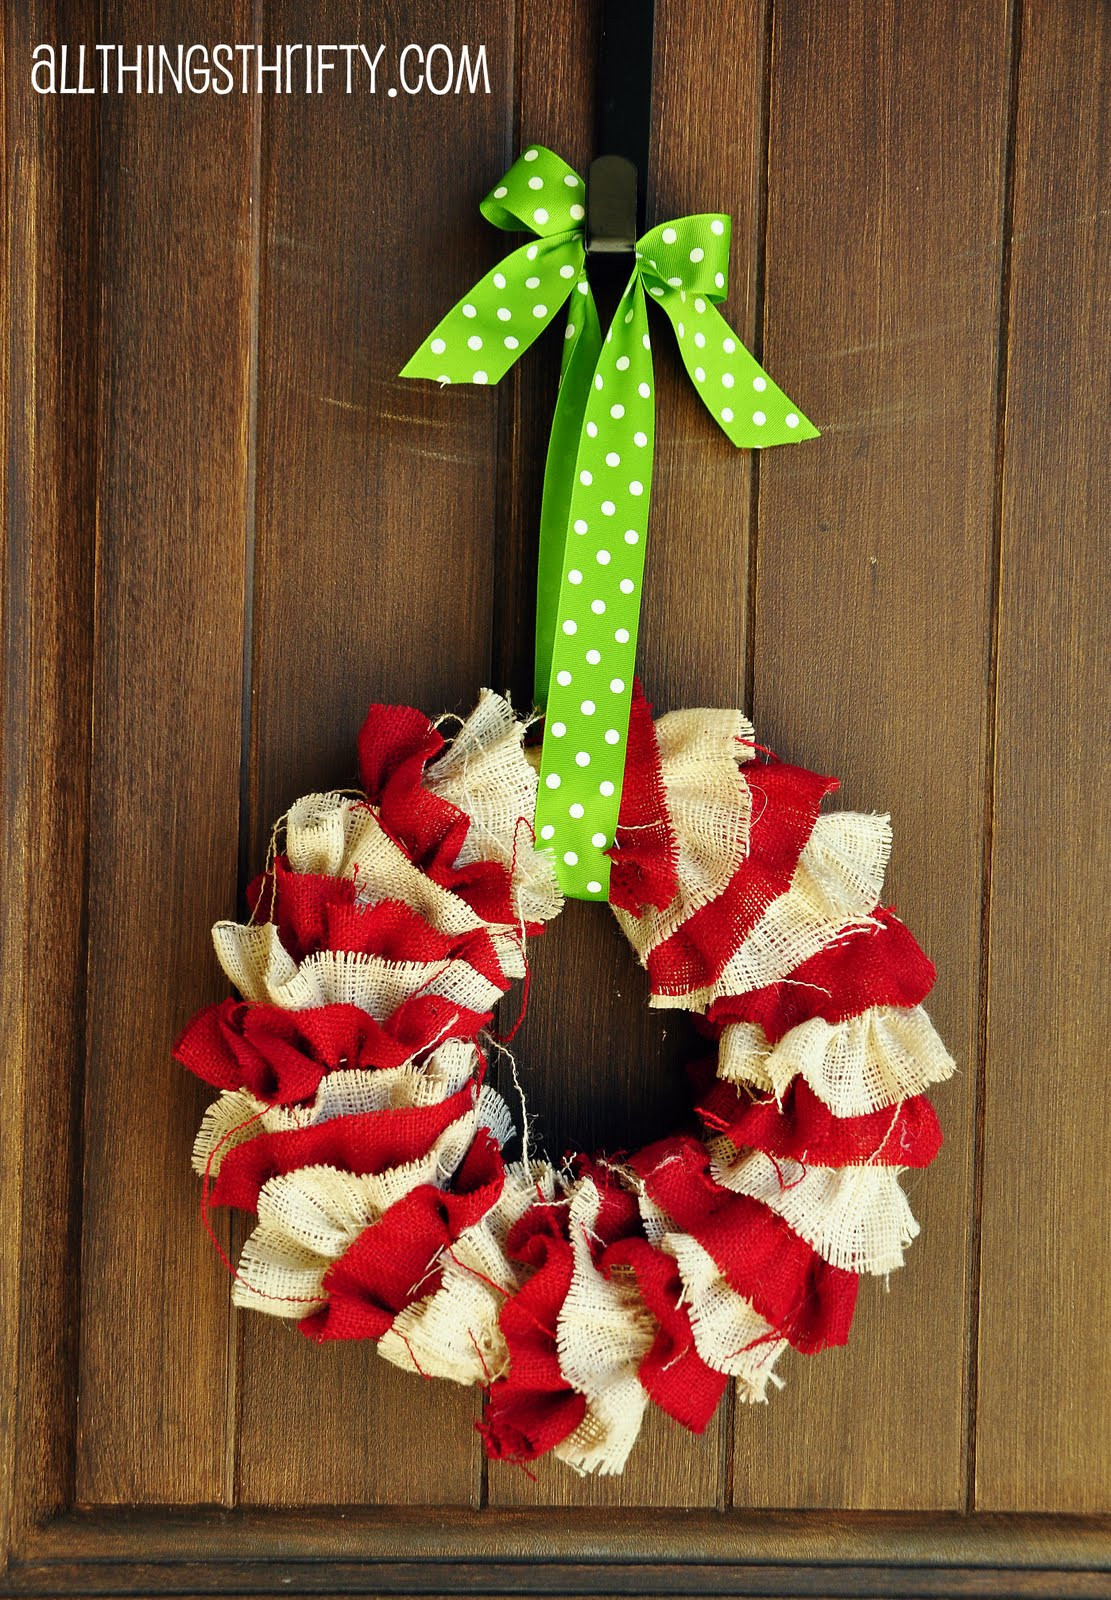 Best ideas about DIY Wreaths Christmas
. Save or Pin Tutorial DIY Christmas Wreath Now.